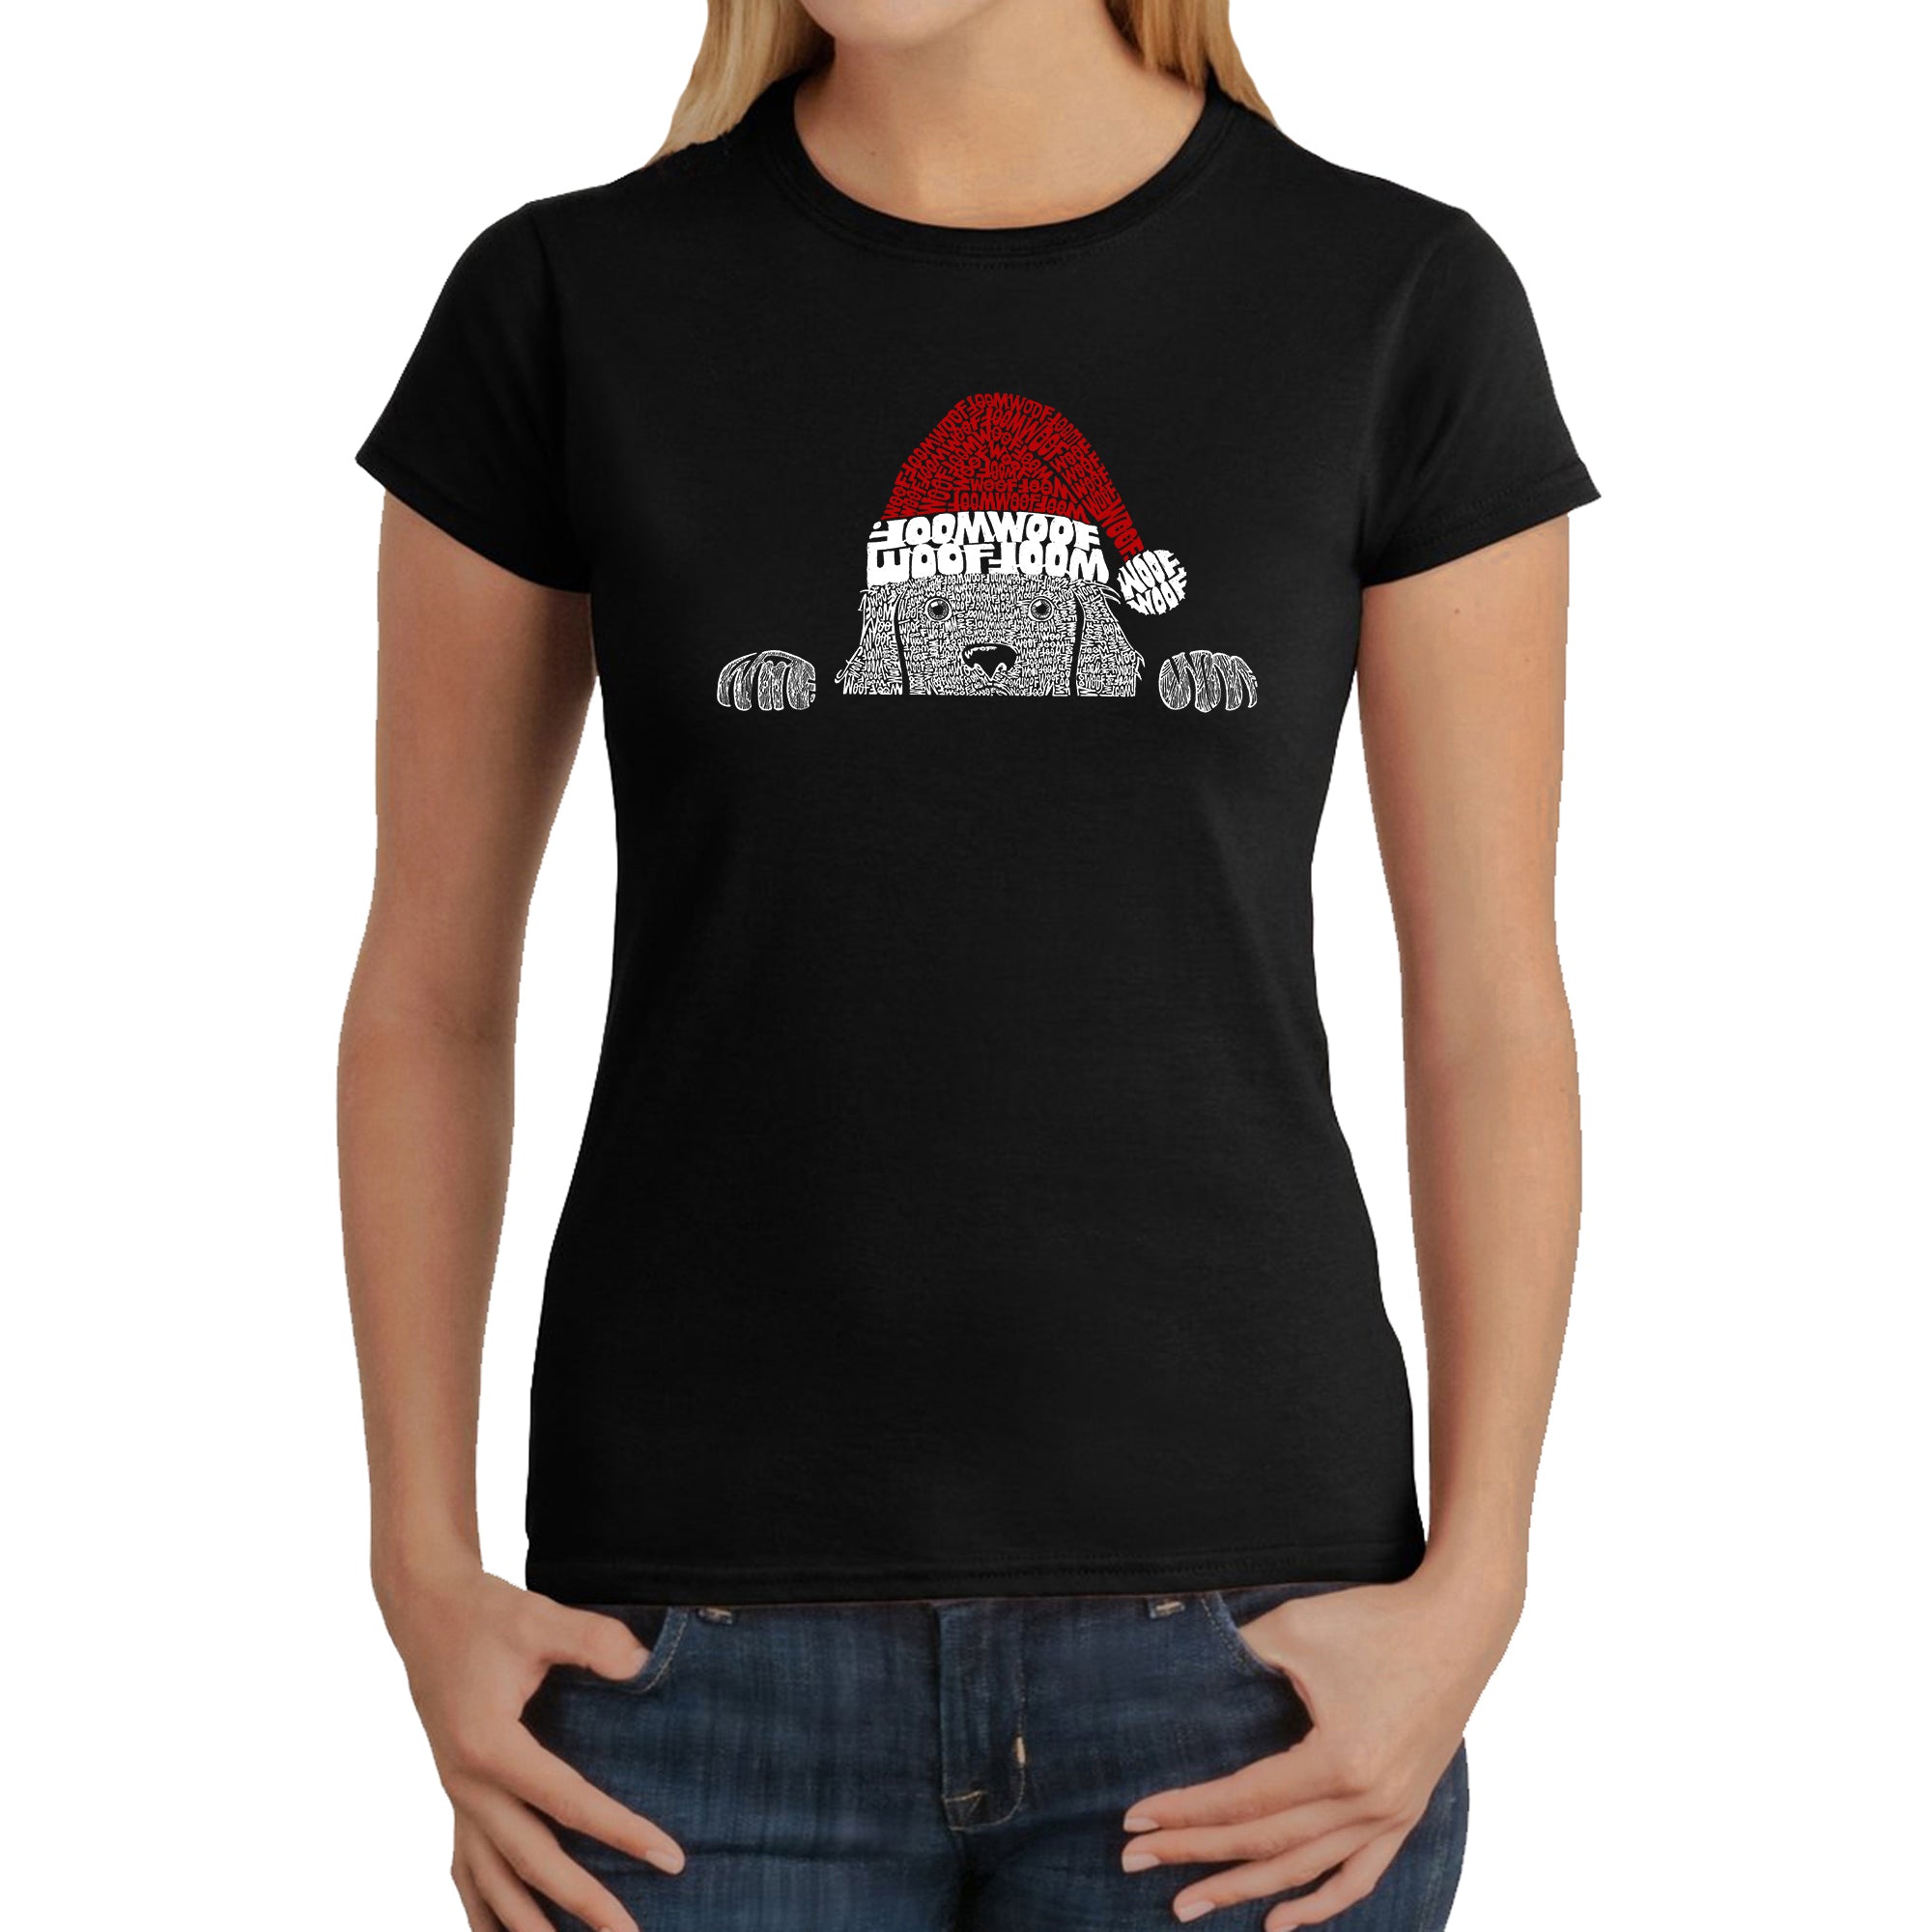 Christmas Peeking Dog - Women's Word Art T-Shirt - Red - Medium